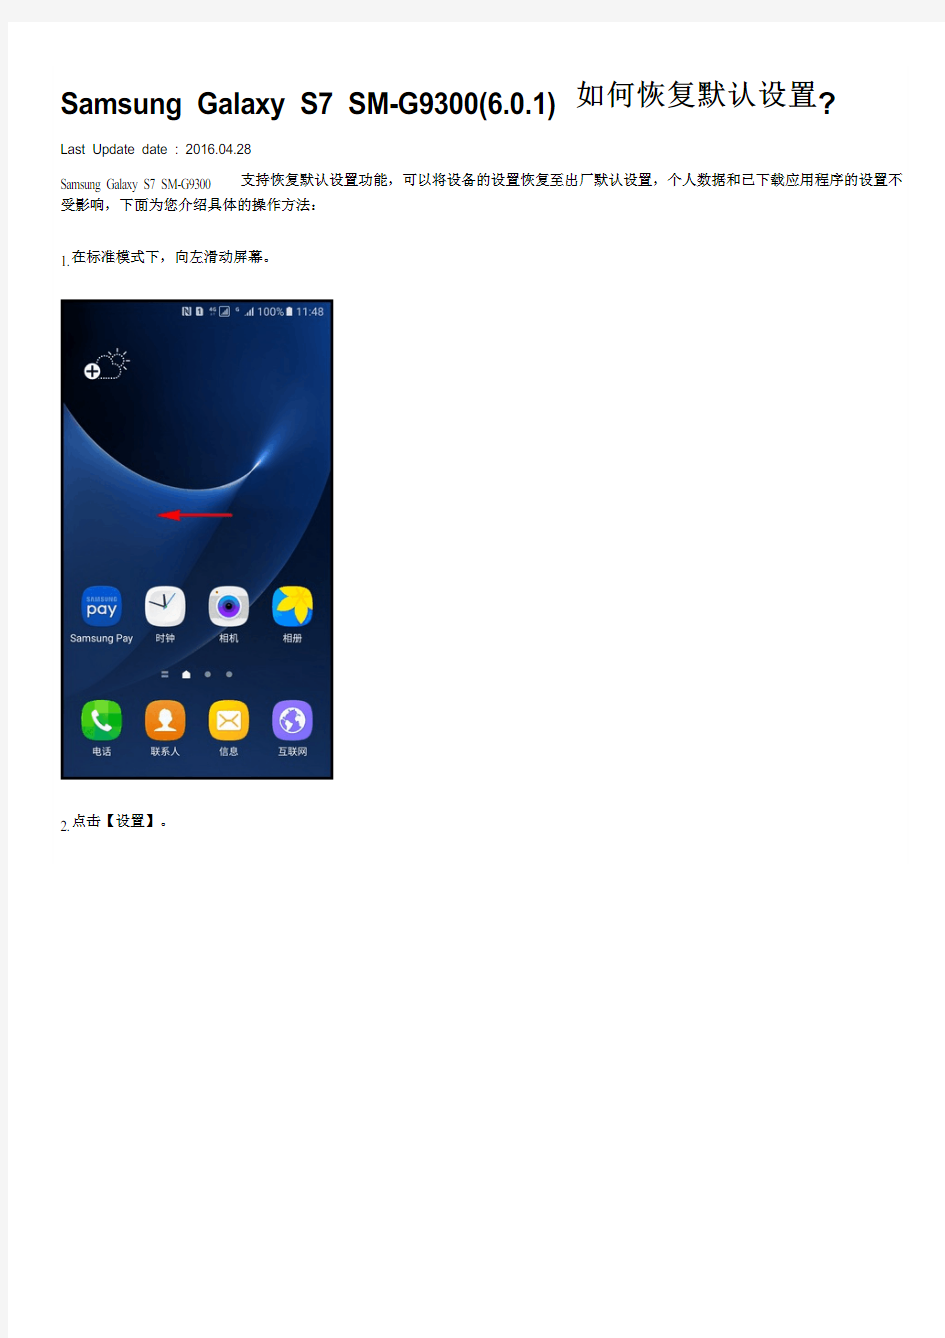 Samsung Galaxy S7 SM-G9300(6.0.1)如何恢复默认设置